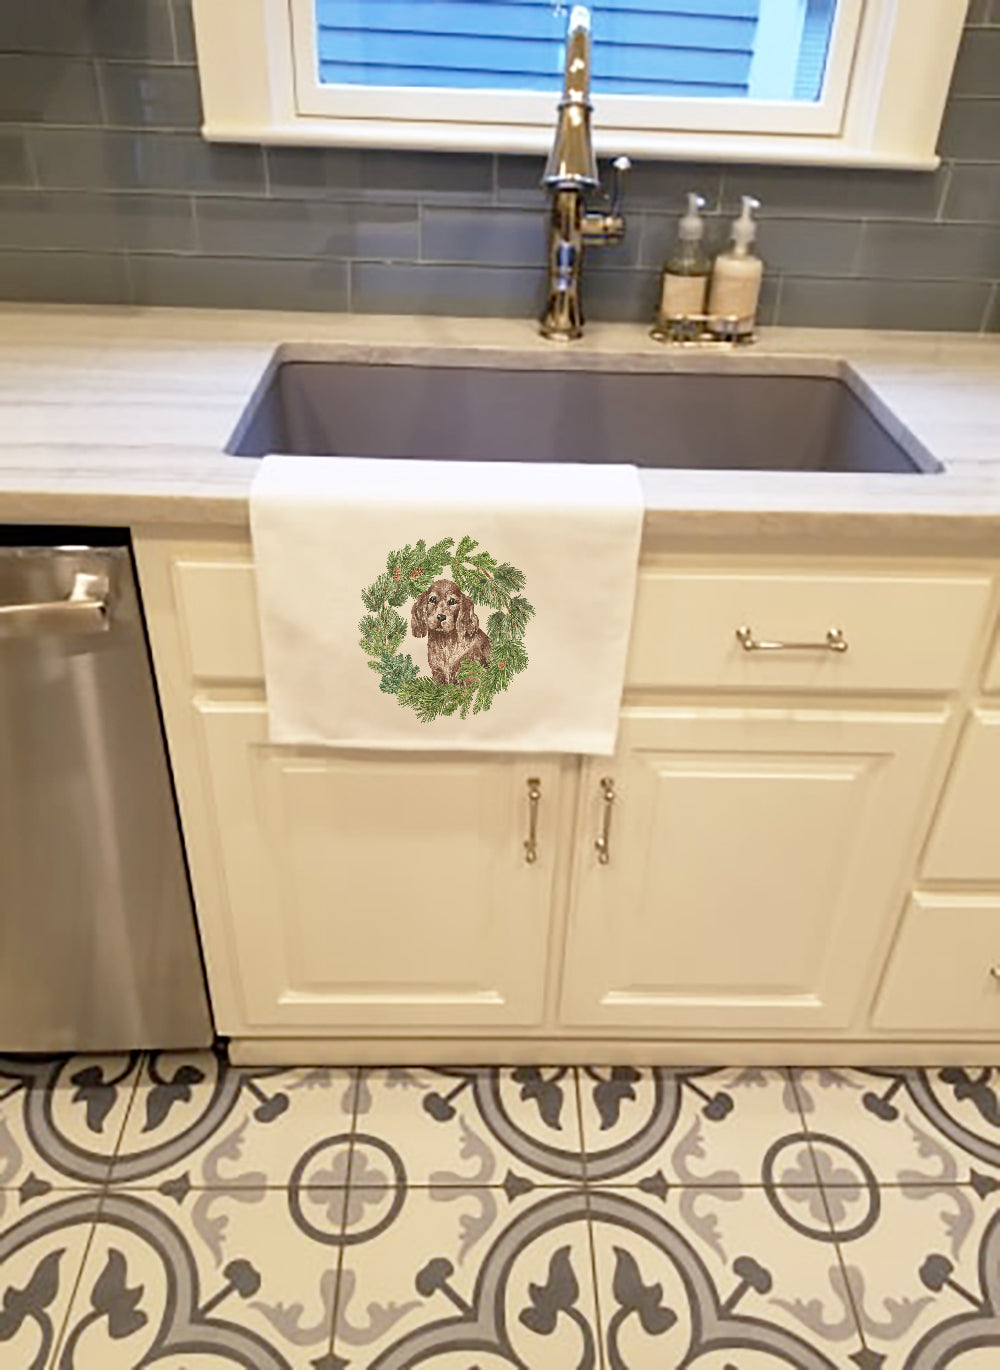 Buy this Cocker Spaniel Puppy Liver Christmas Wreath White Kitchen Towel Set of 2